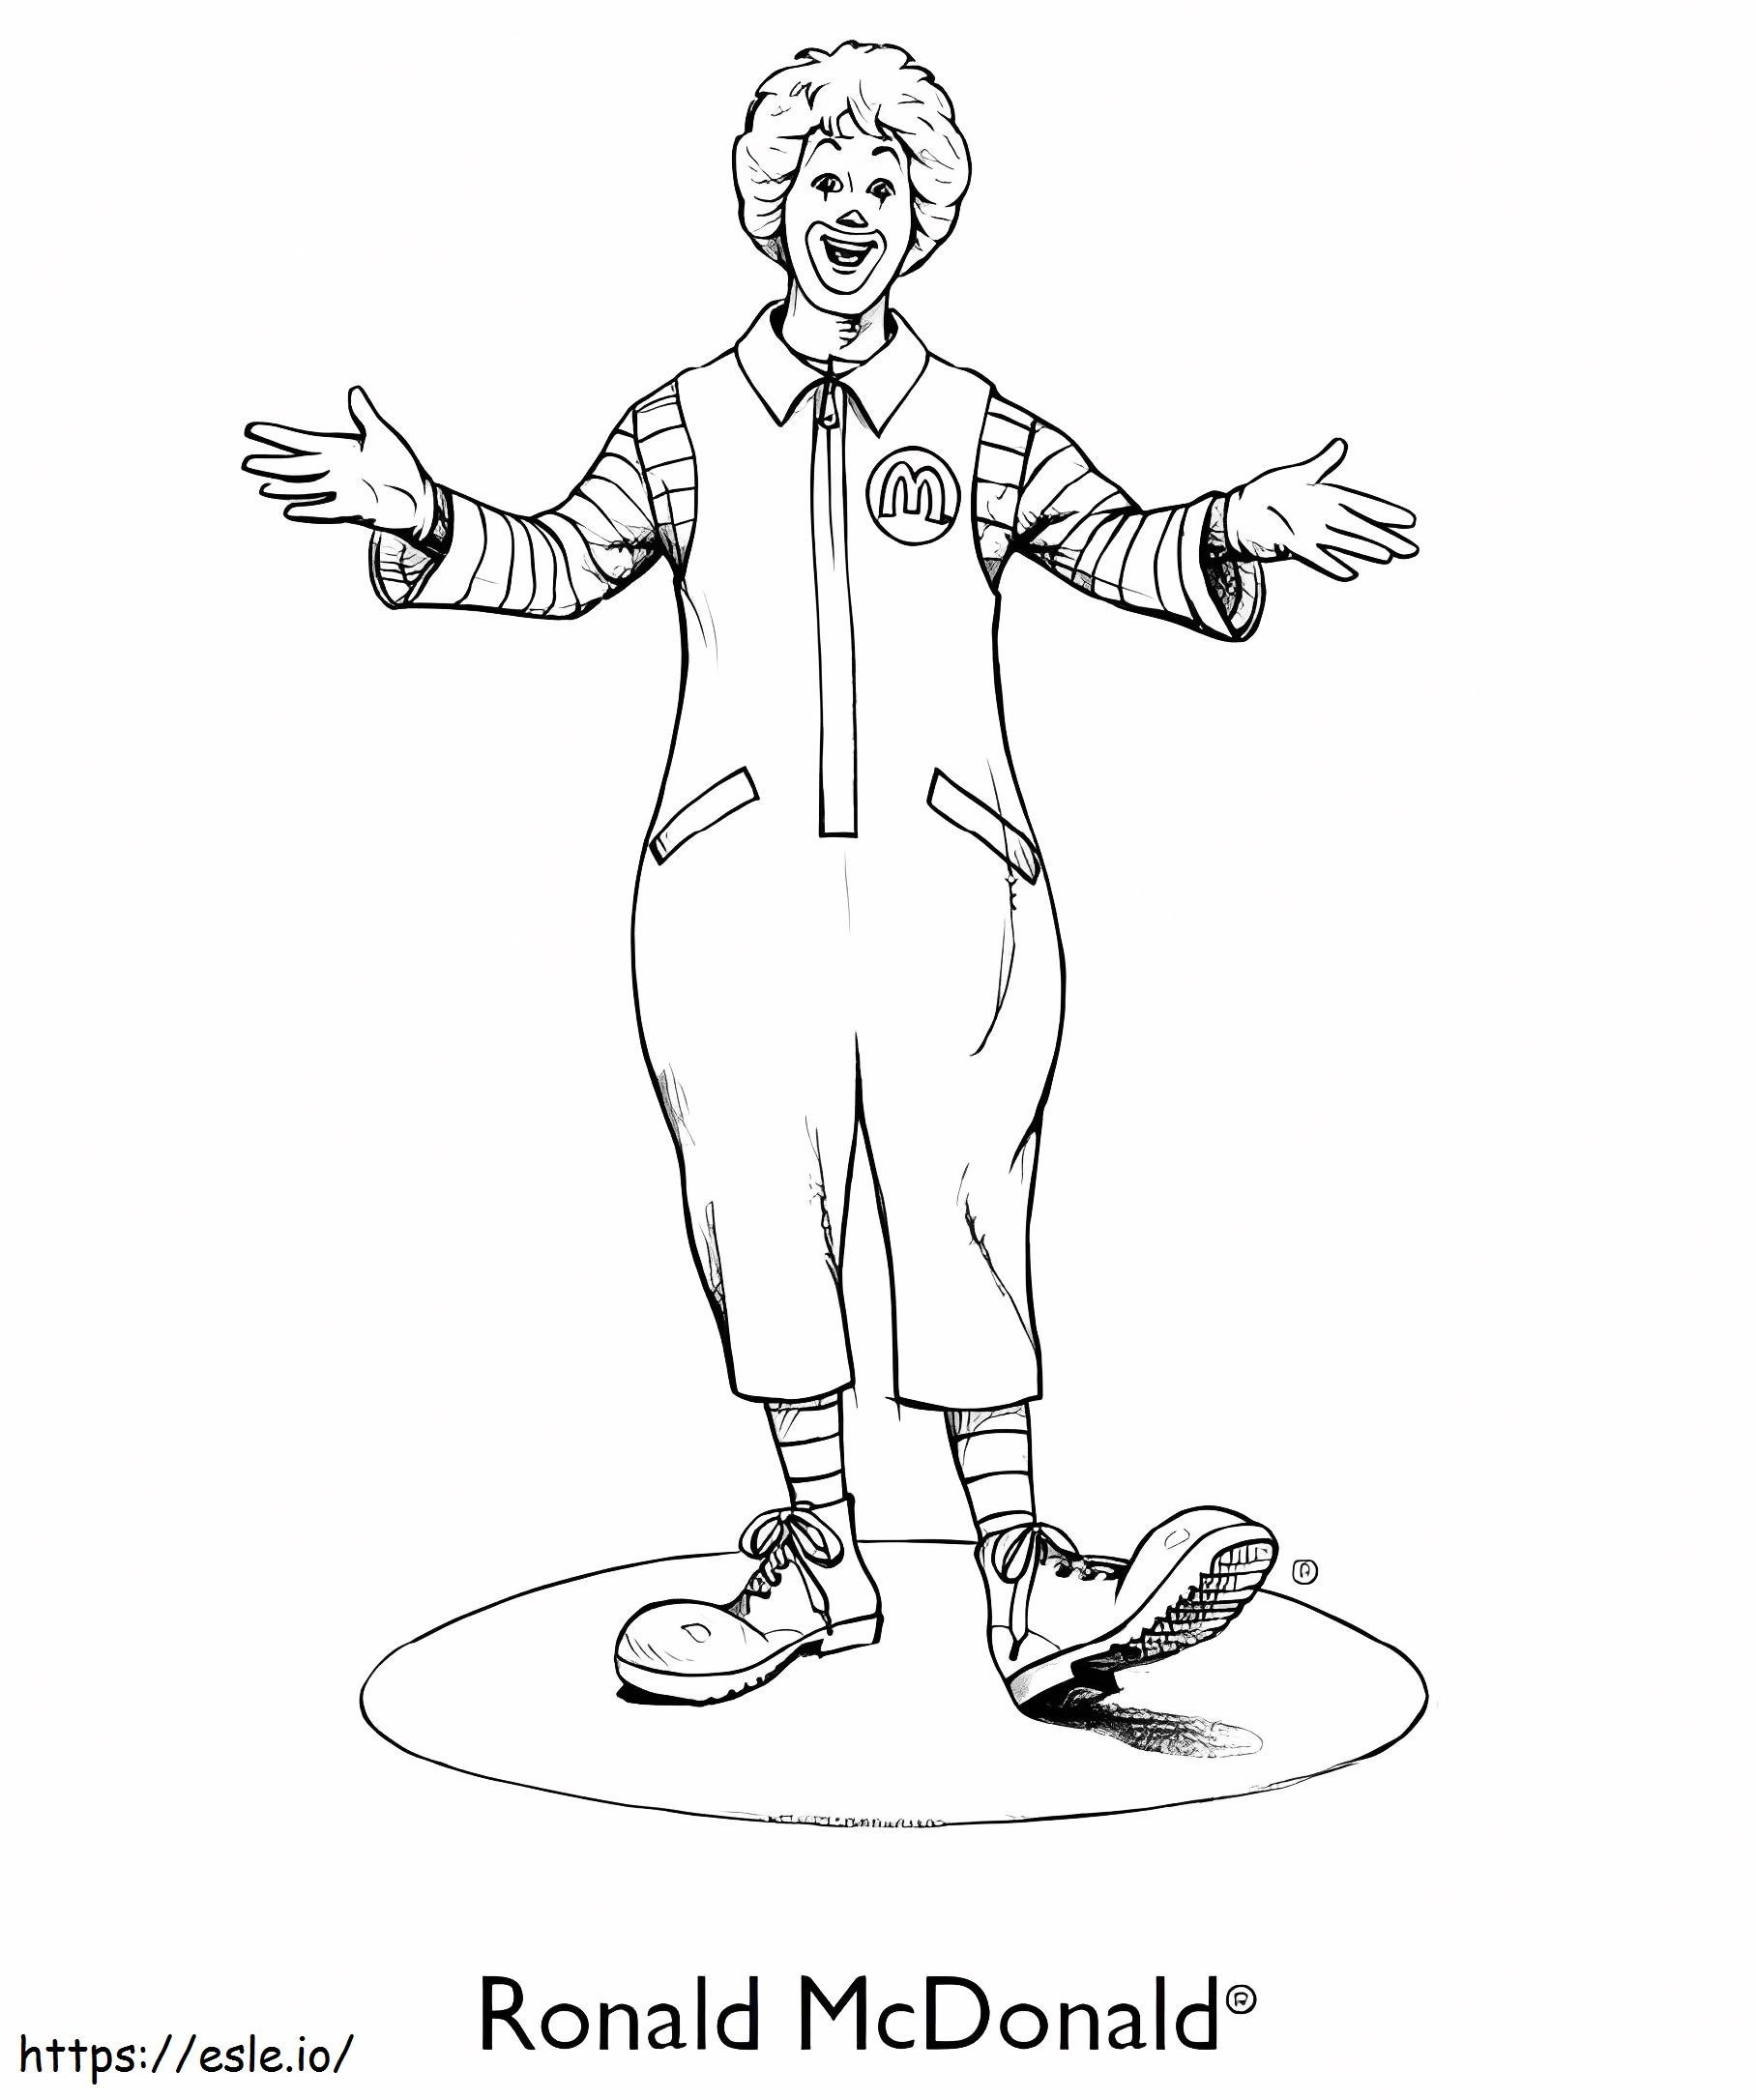 Funny Ronald McDonald coloring page